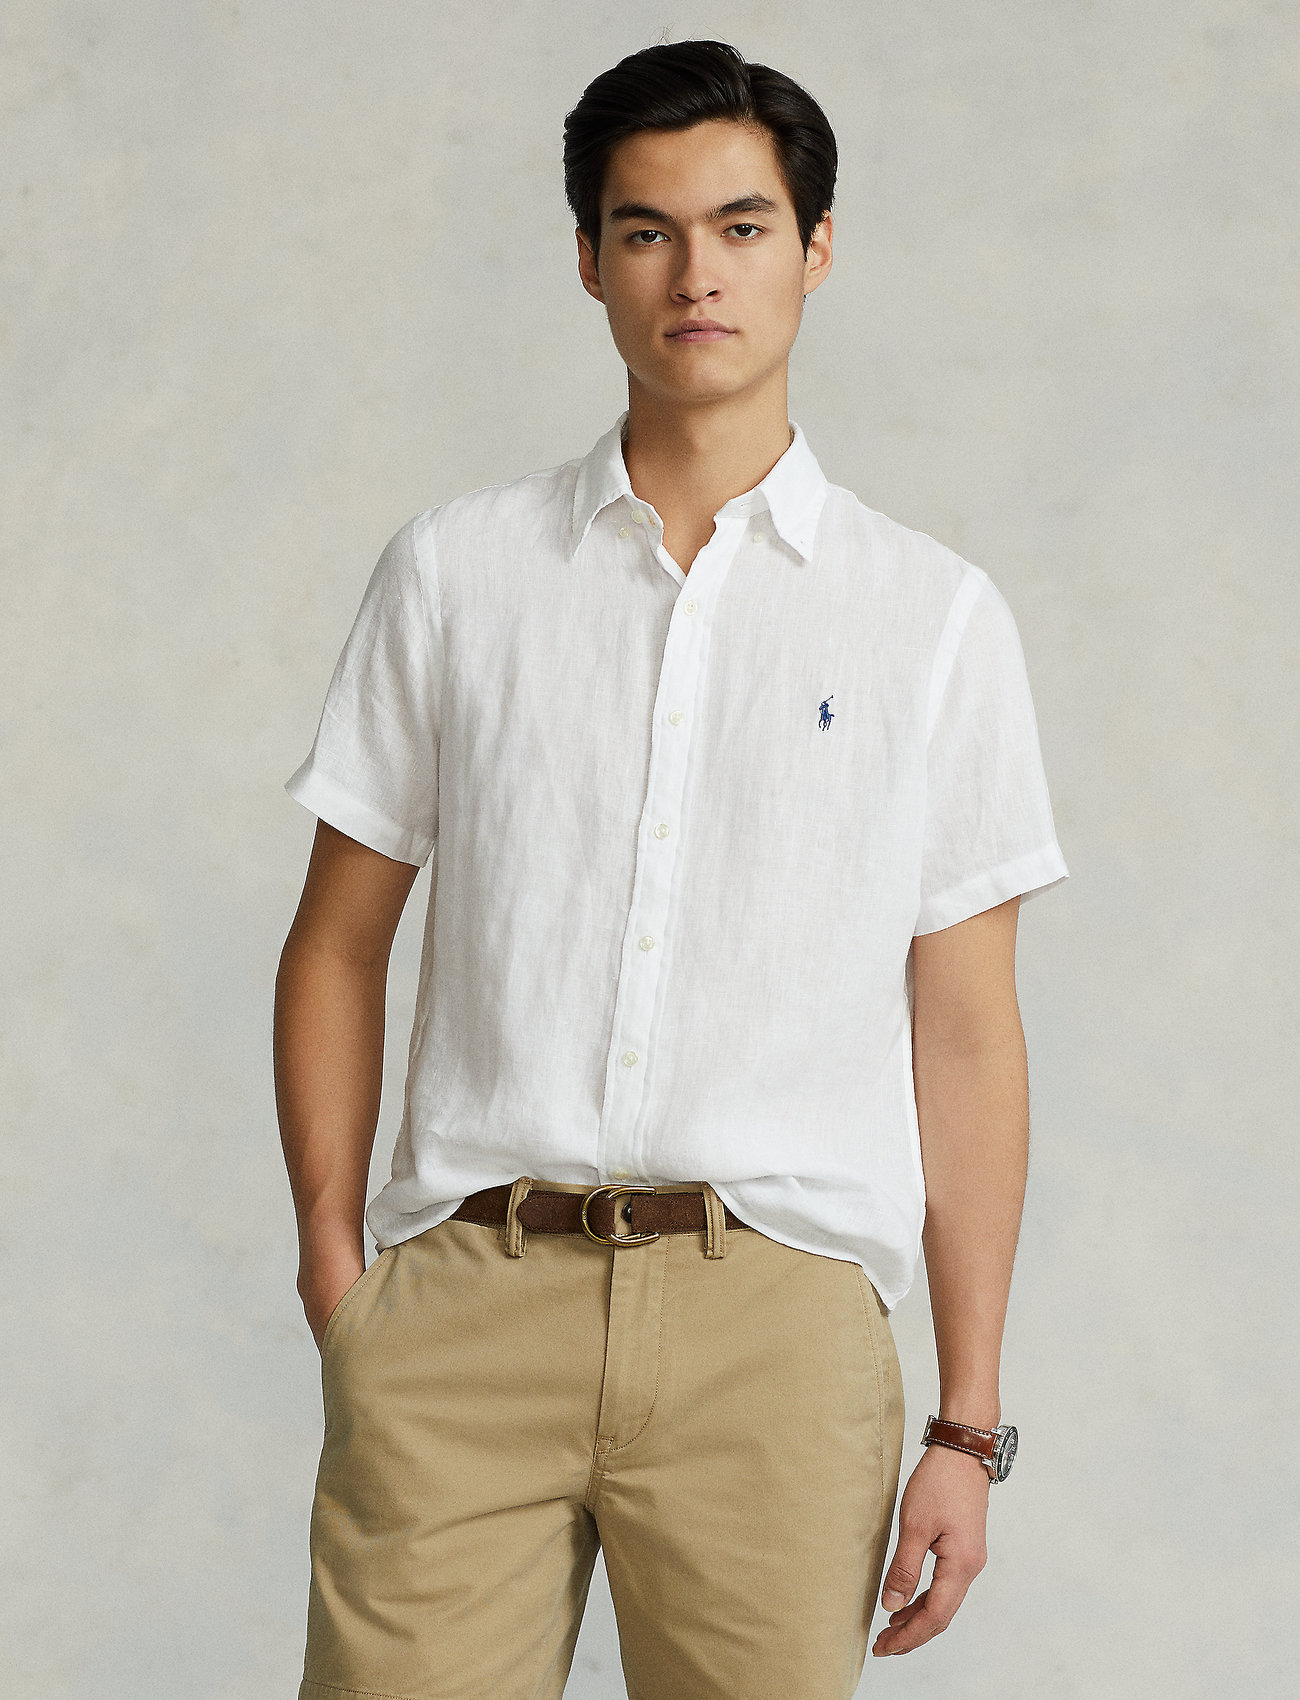 Polo Ralph Lauren Slim Fit Linen Shirt - Vacation essentials 